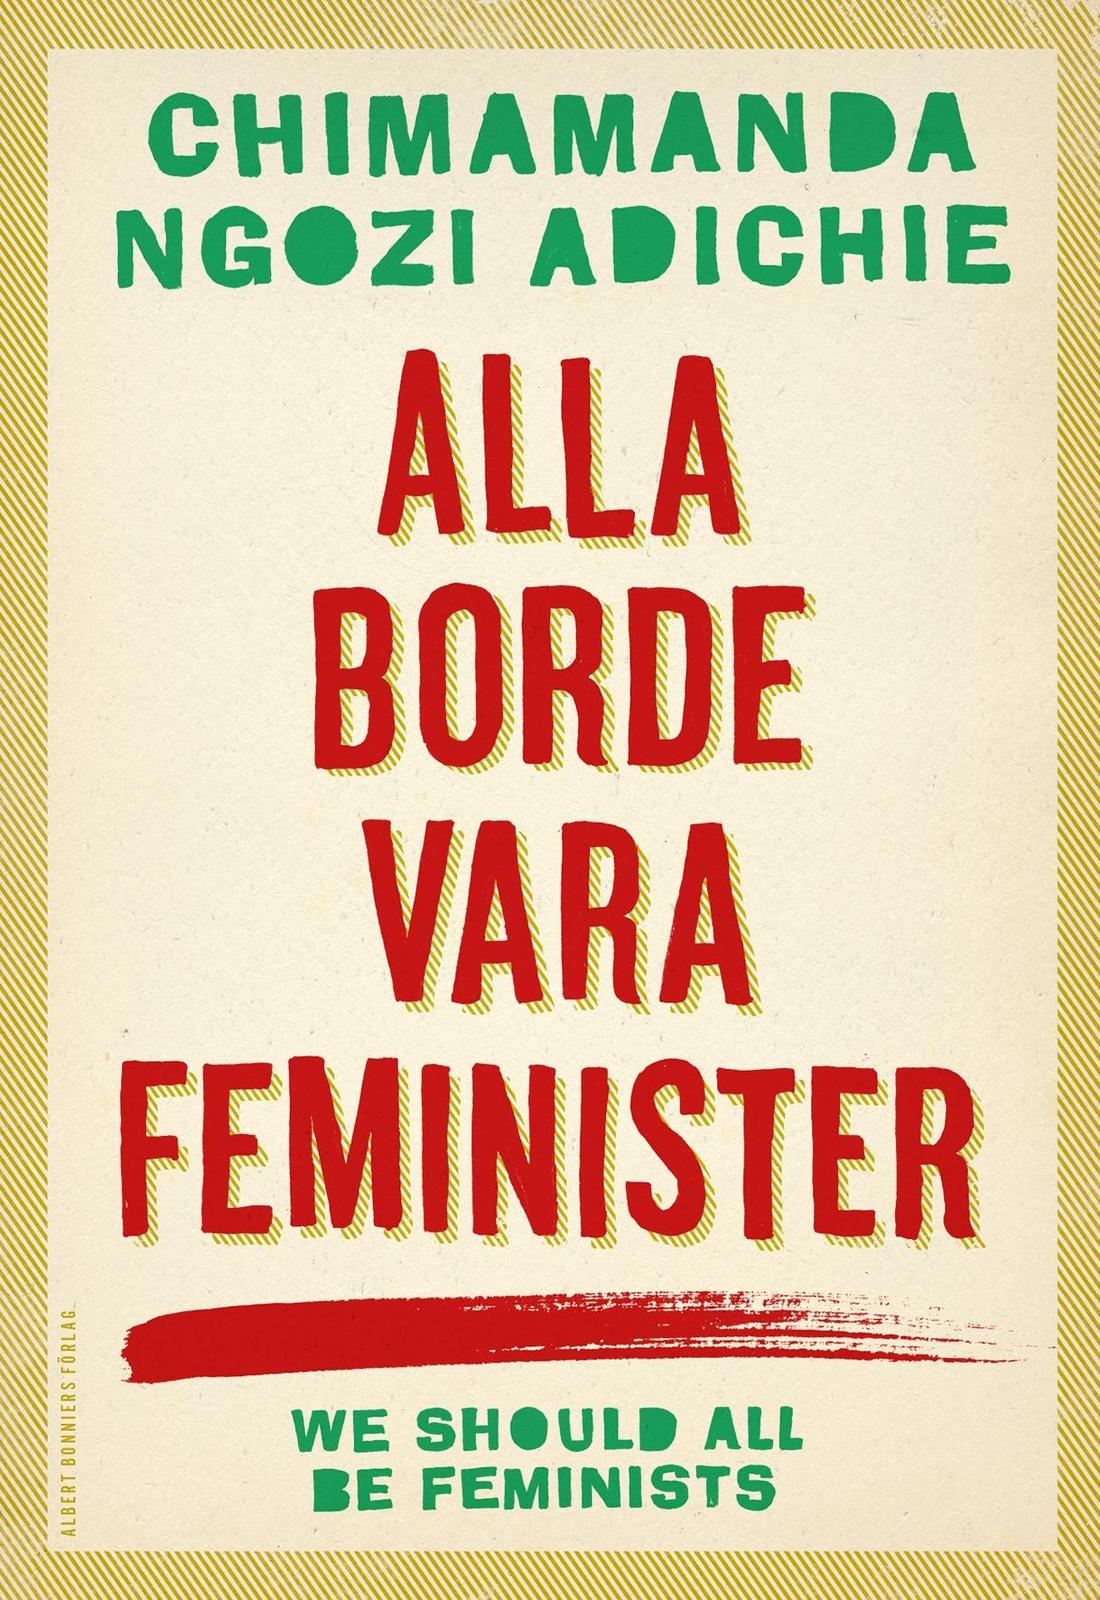 Alla borde vara feminister (Swedish language)